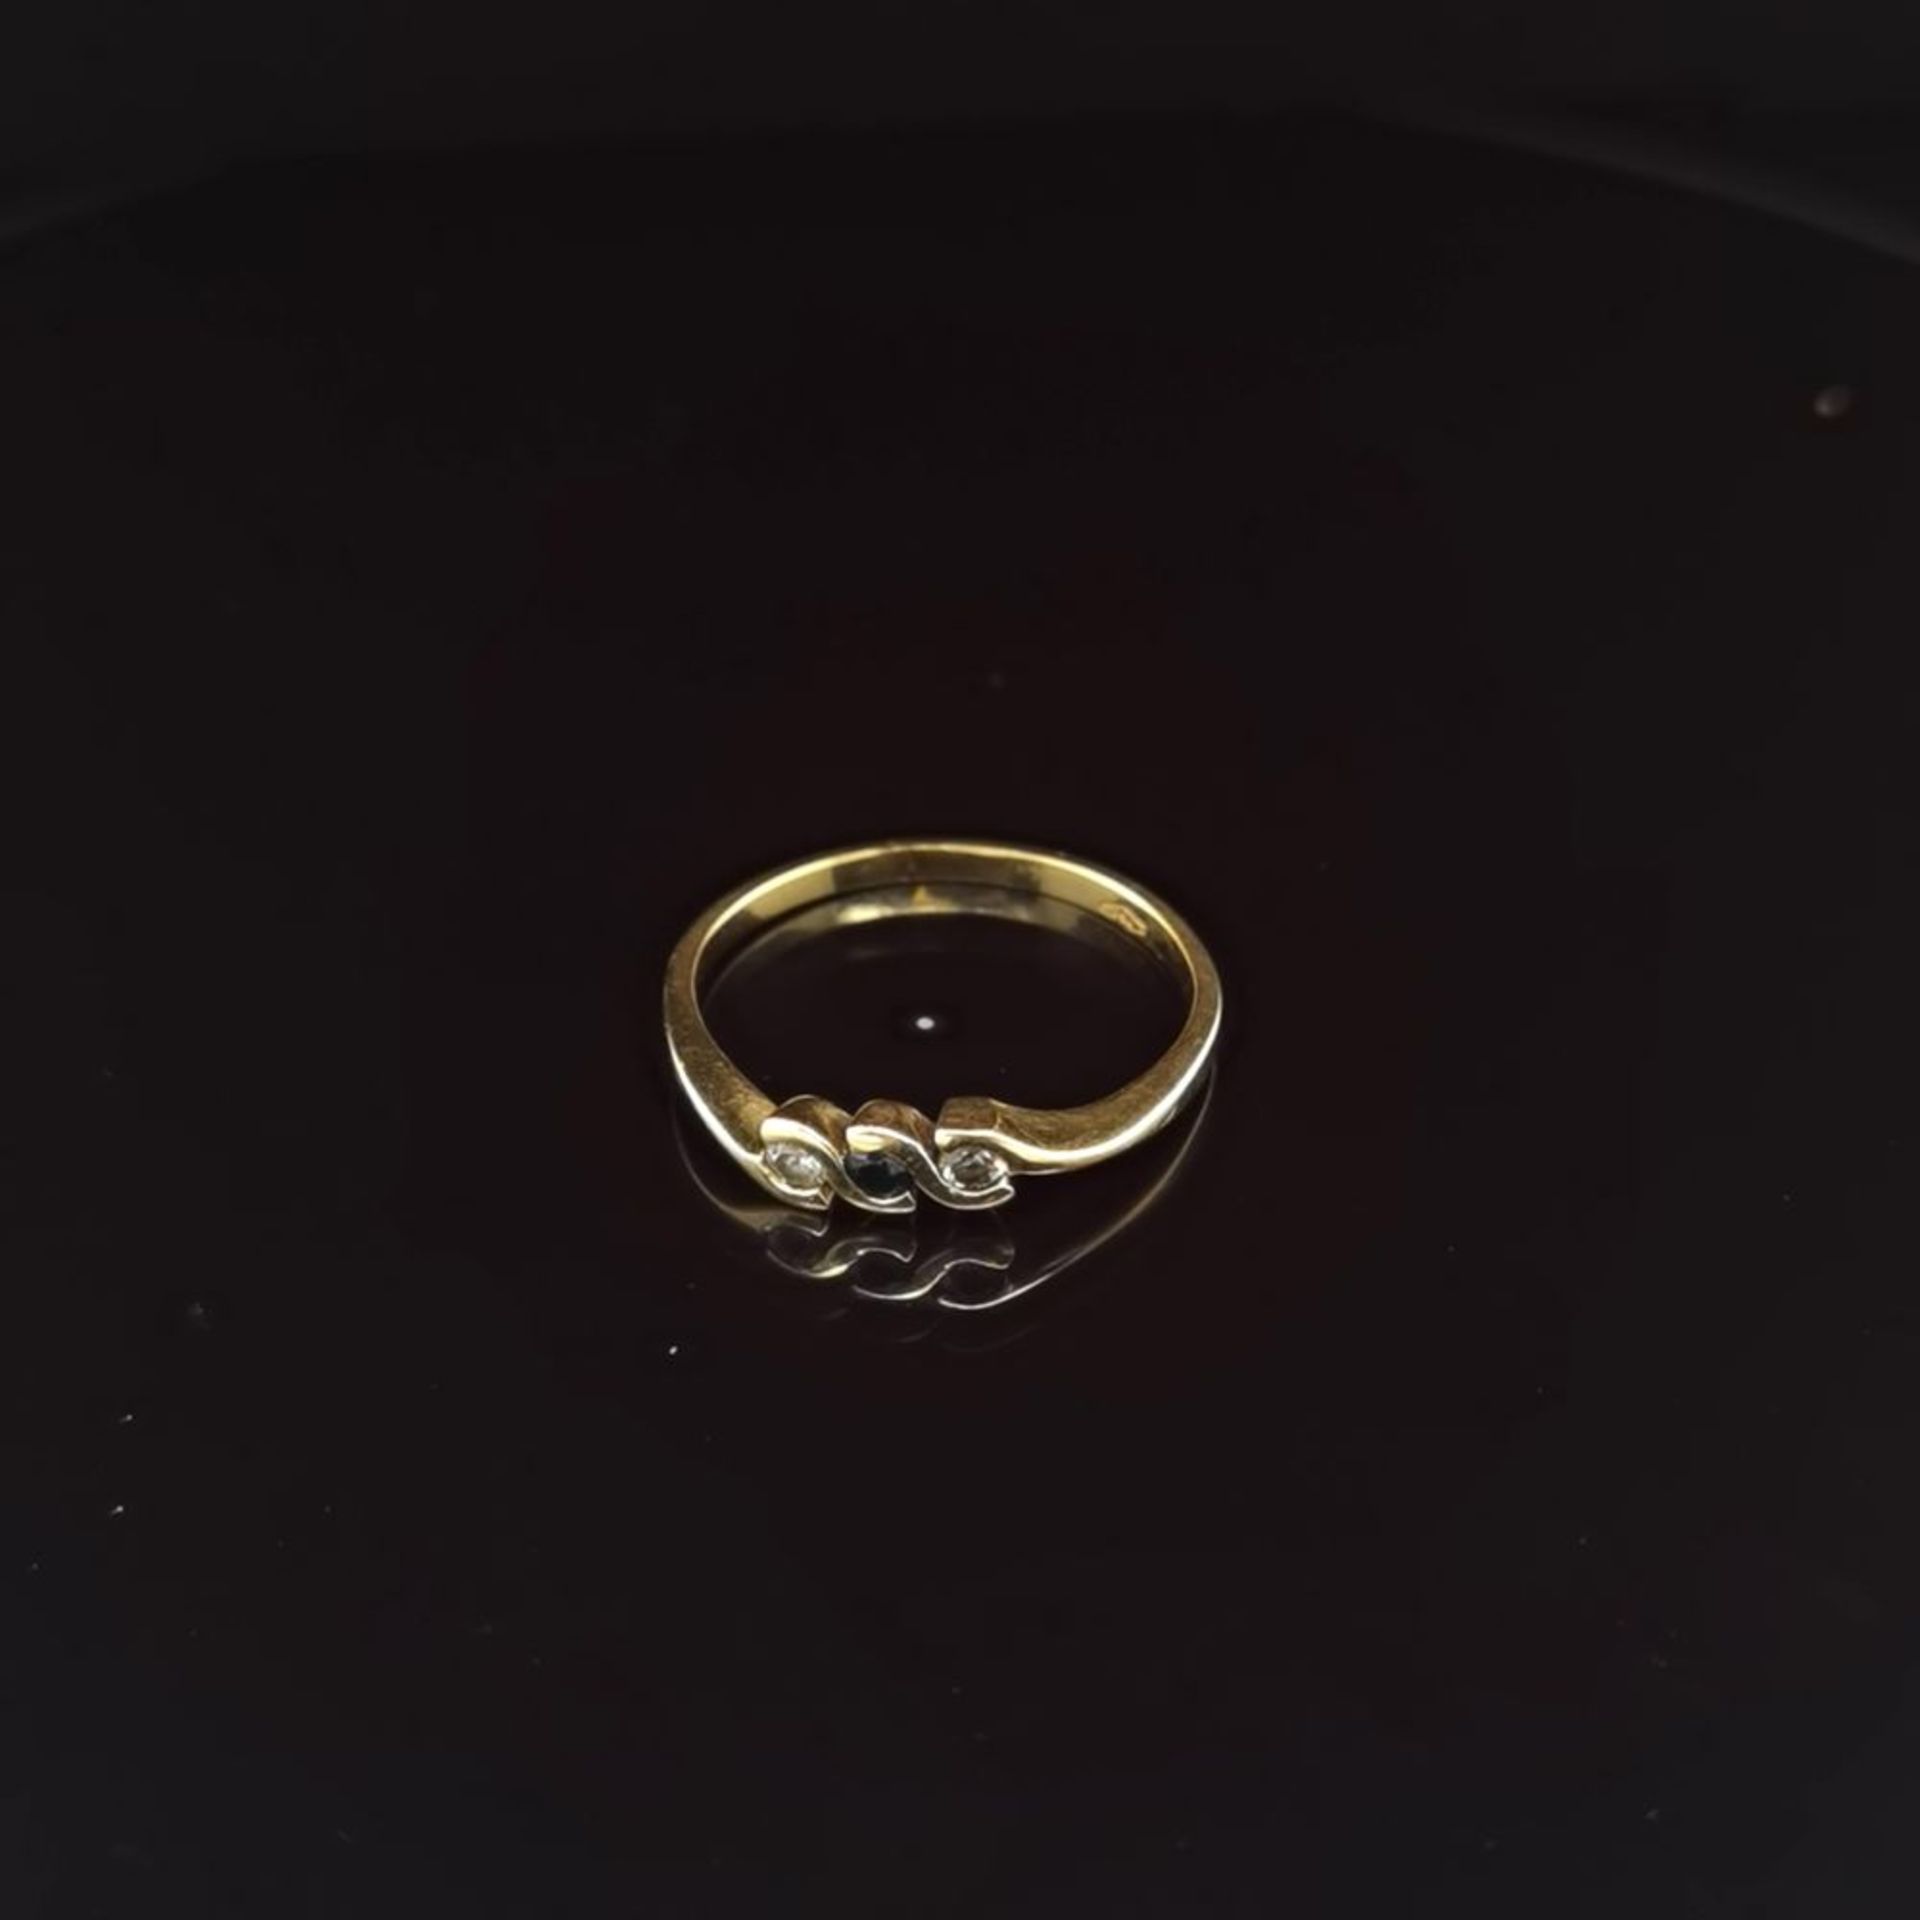 Saphir-Brillant-Ring, 750 Gelbgold 2,1